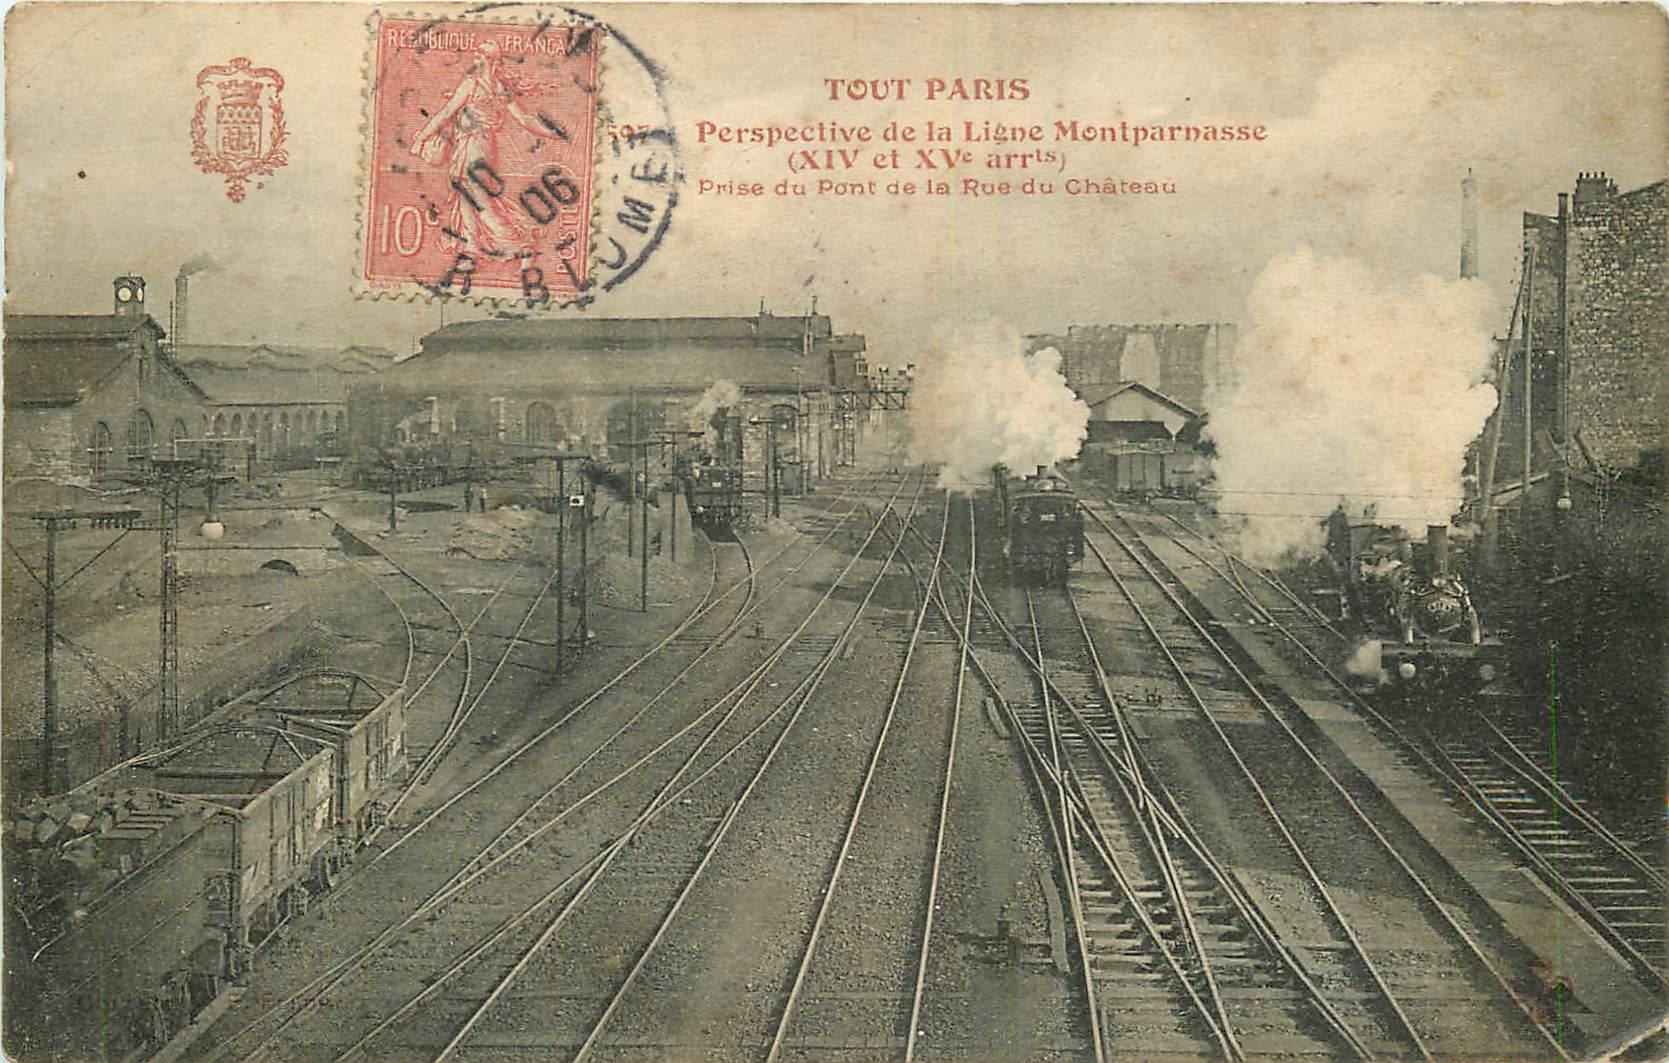 WW PARIS XIV. La Gare Montparnasse 1906